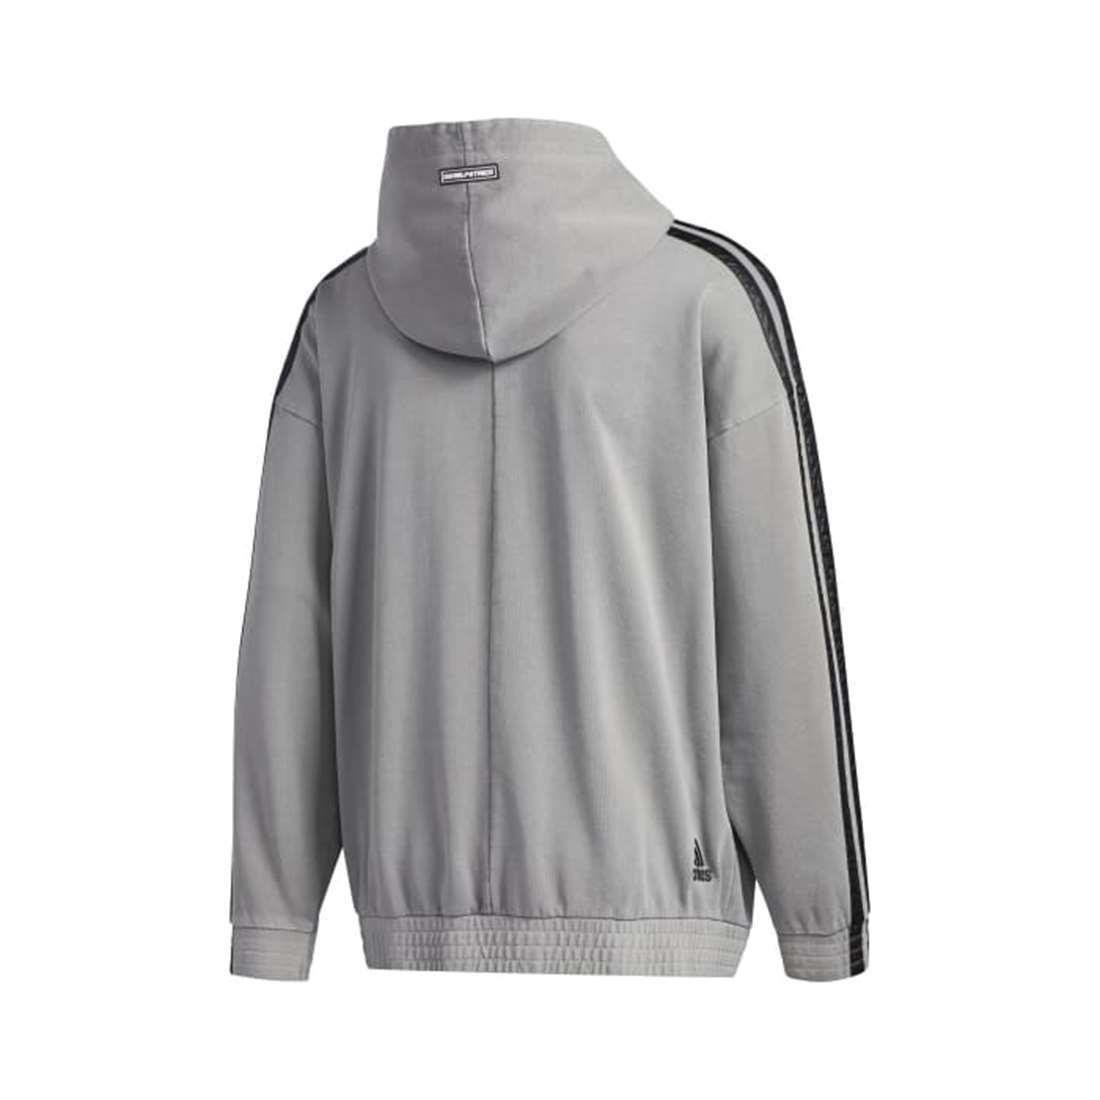 Adidas Hoodie Daniel Patrick x James Harden Grey Pullover Basketball Hoodie Regular